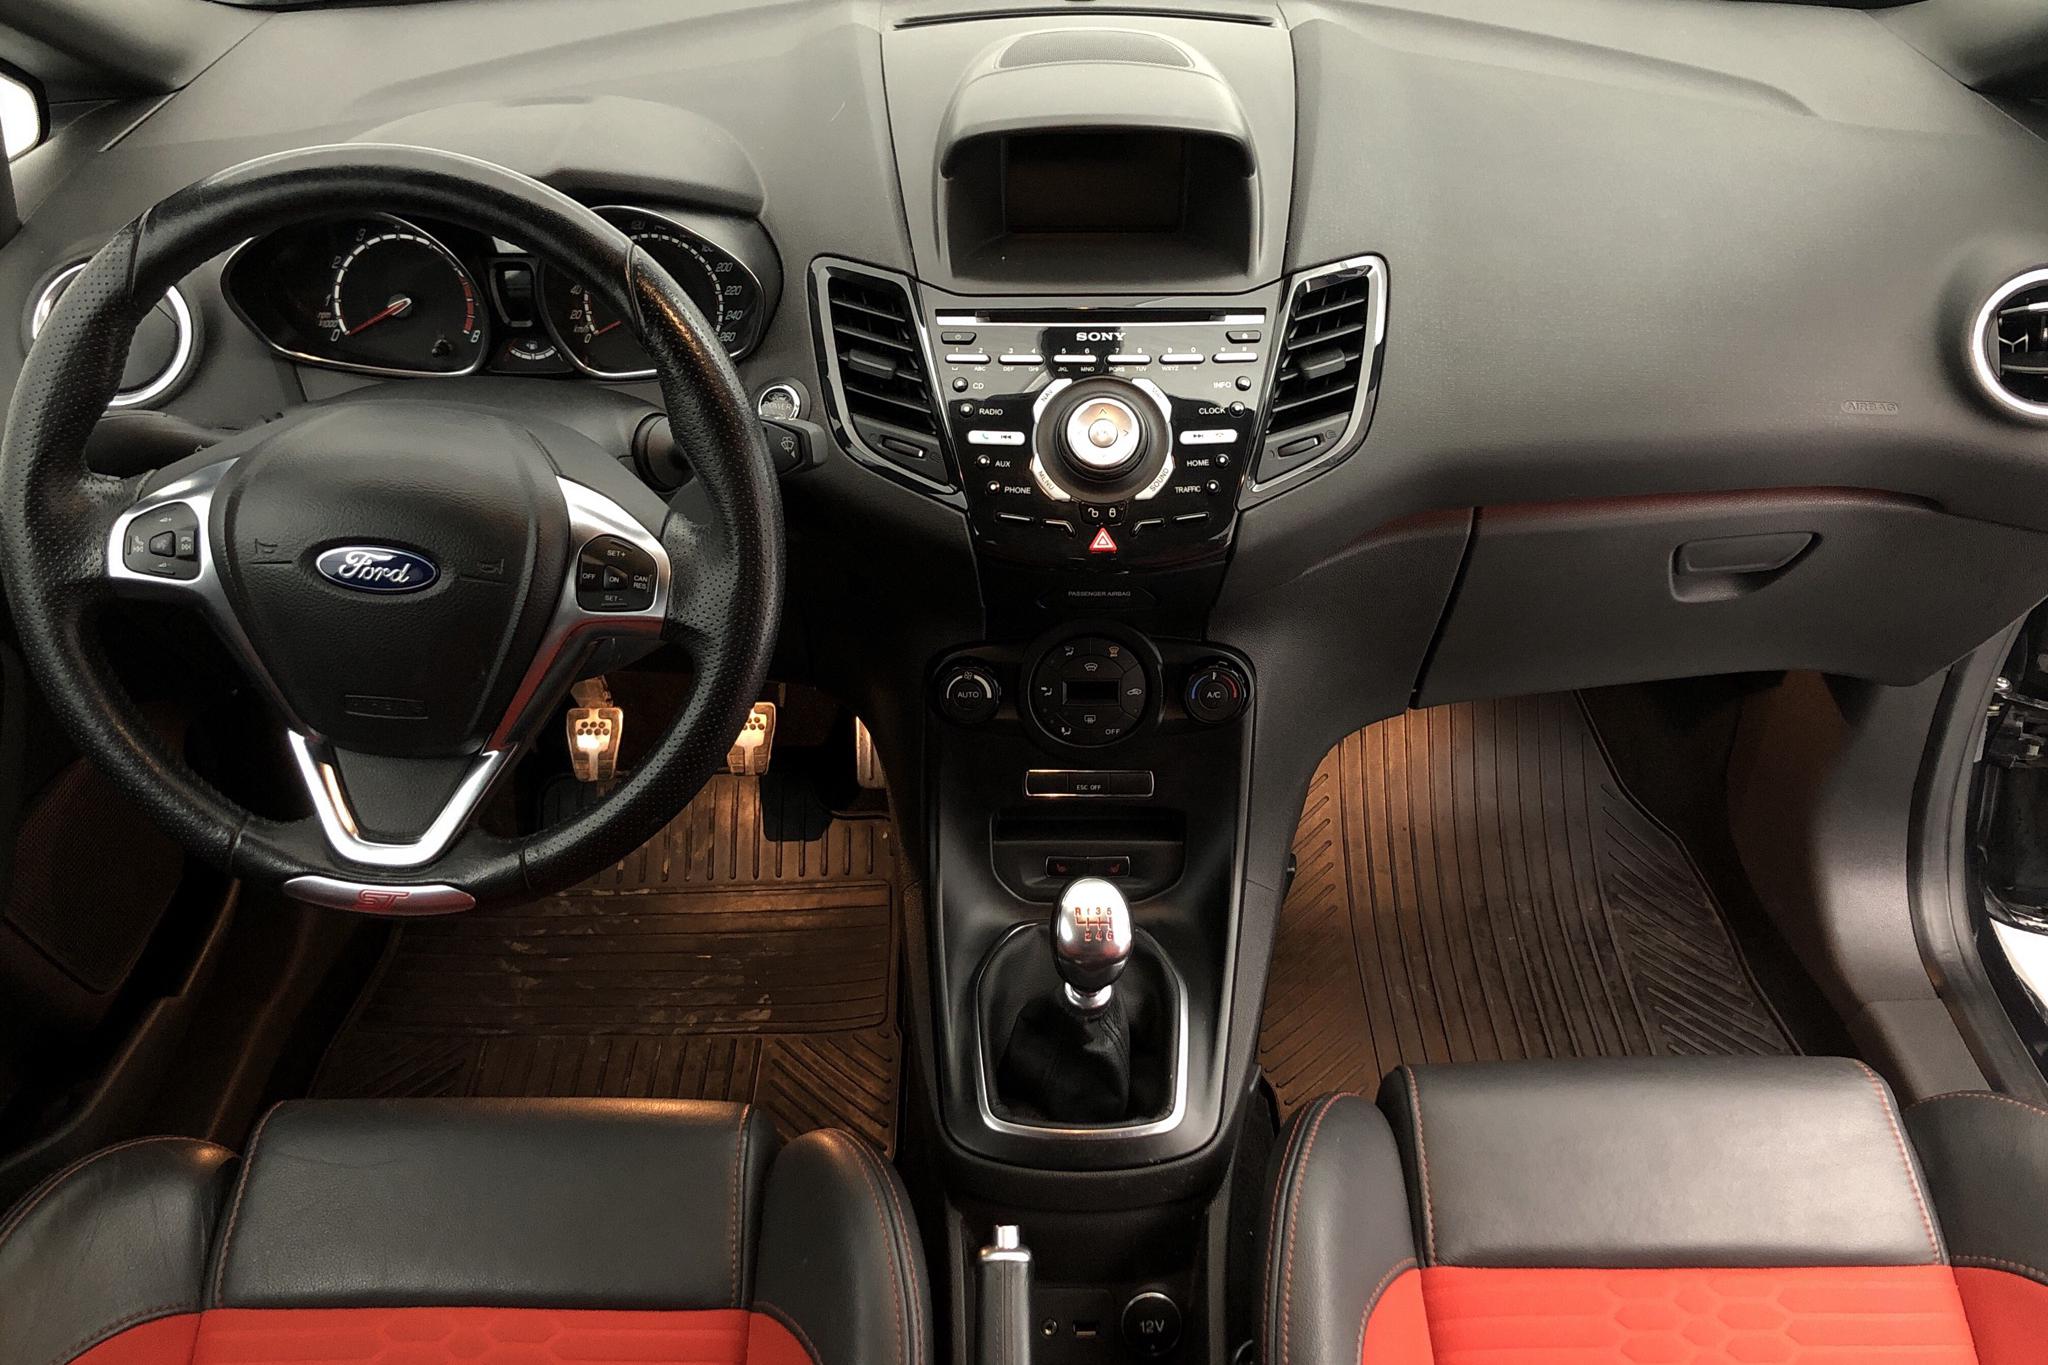 Ford Fiesta 1.6 ST 3dr (182hk) - 107 990 km - Manual - black - 2015